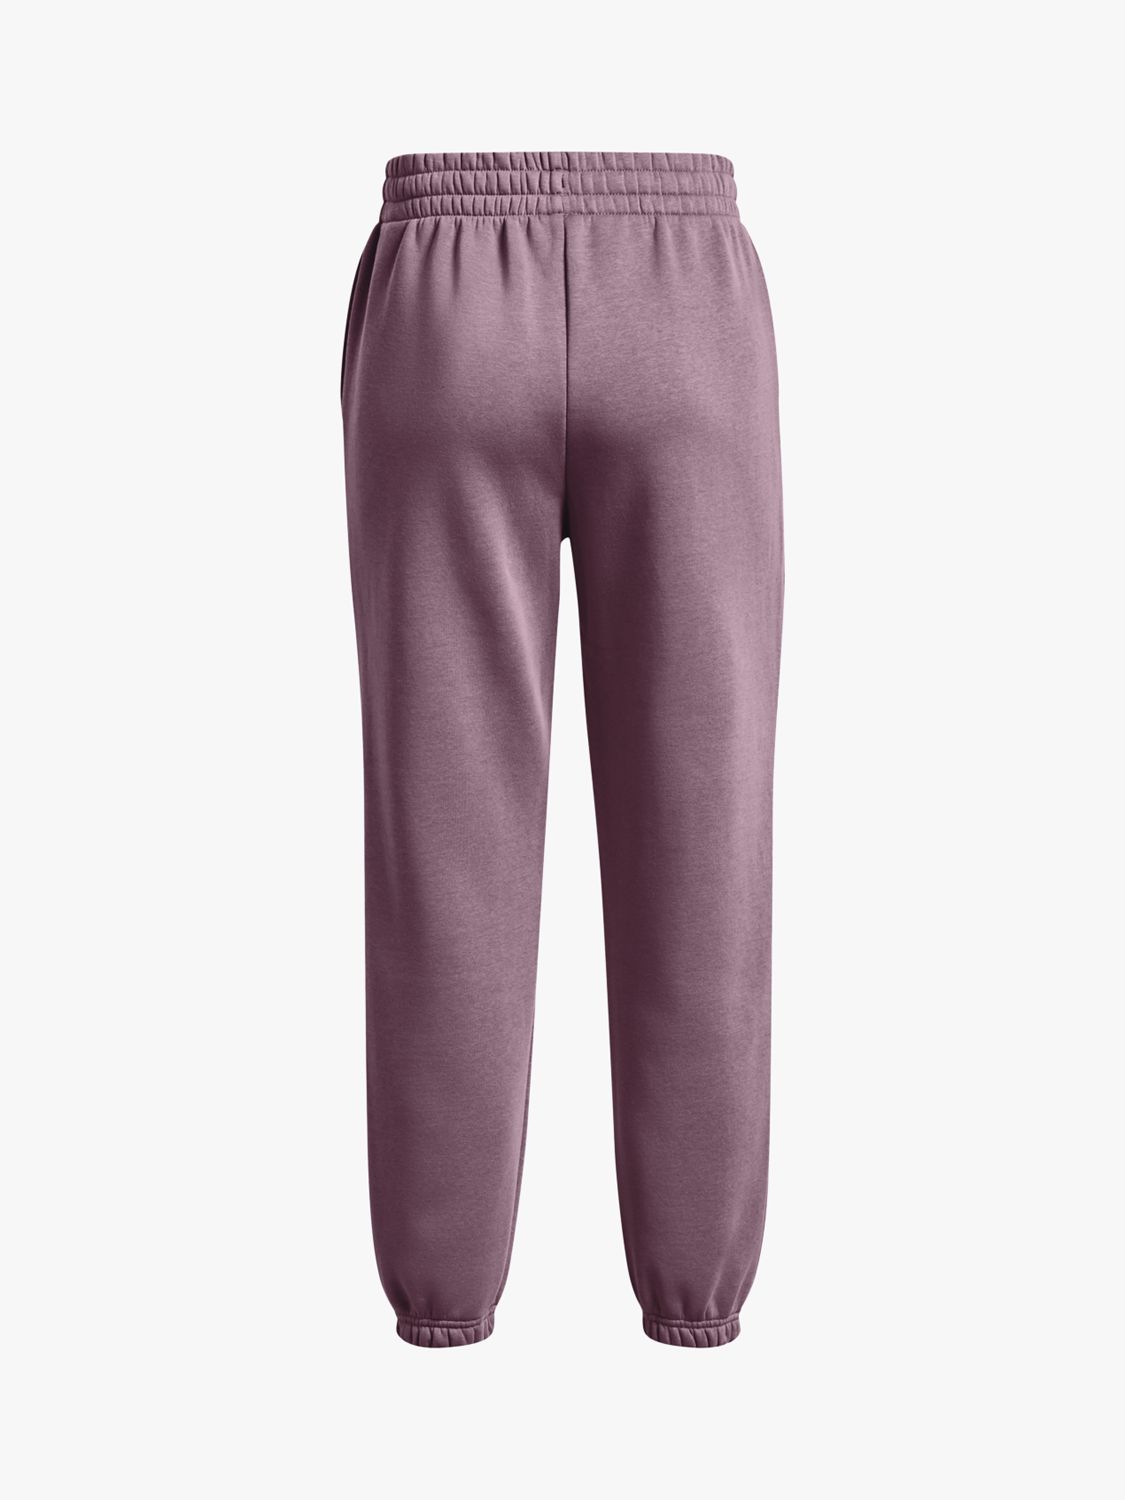  Armour Fleece Jogger, Purple - women's trousers - UNDER  ARMOUR - 50.43 € - outdoorové oblečení a vybavení shop